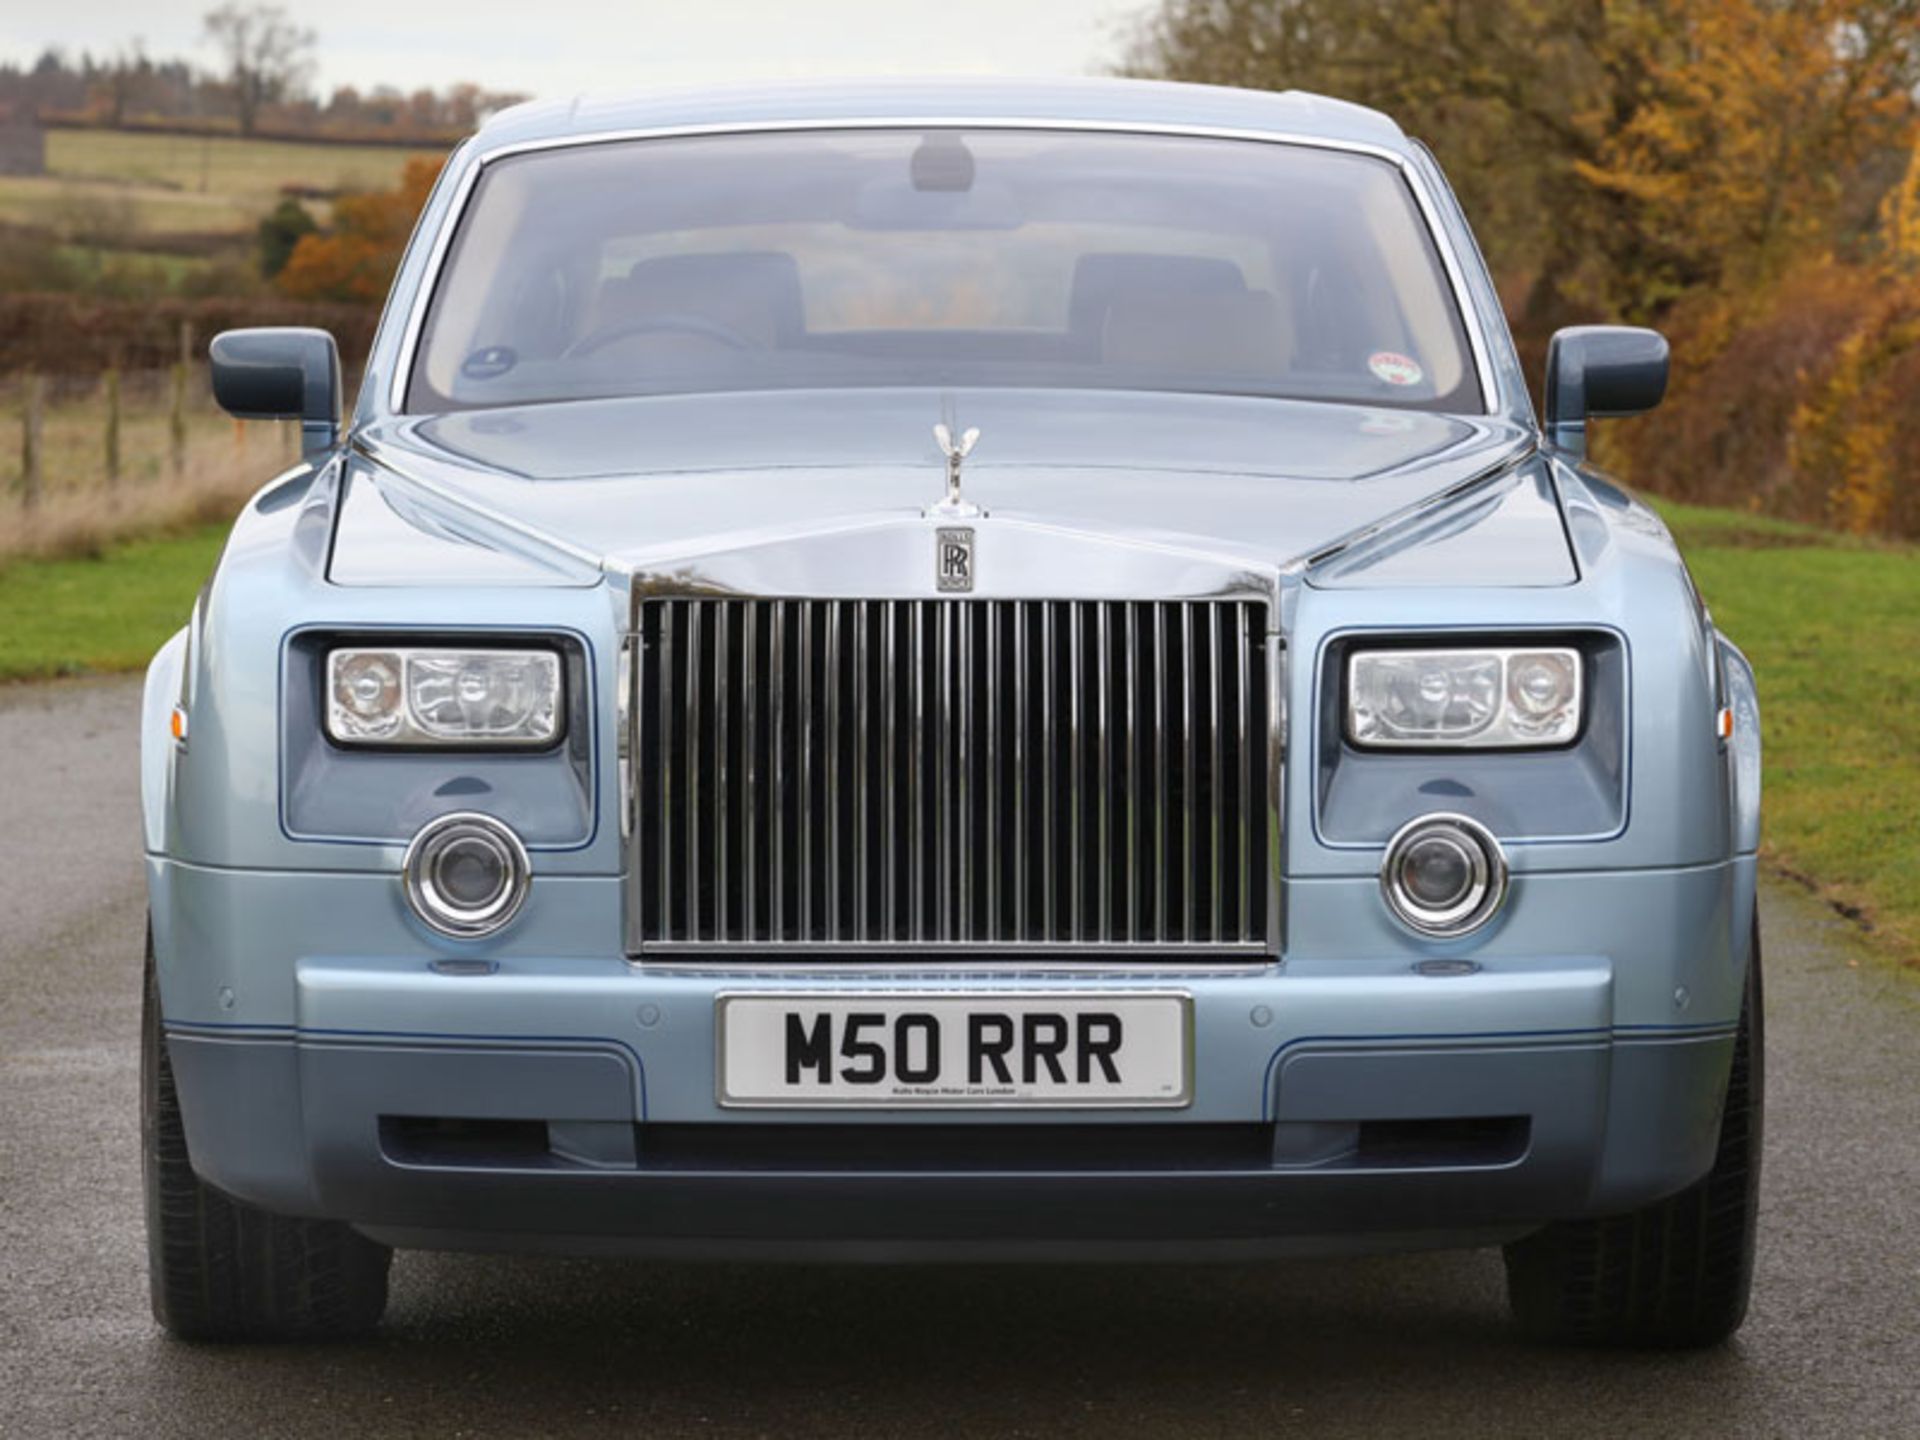 2003 Rolls-Royce Phantom - Image 2 of 9